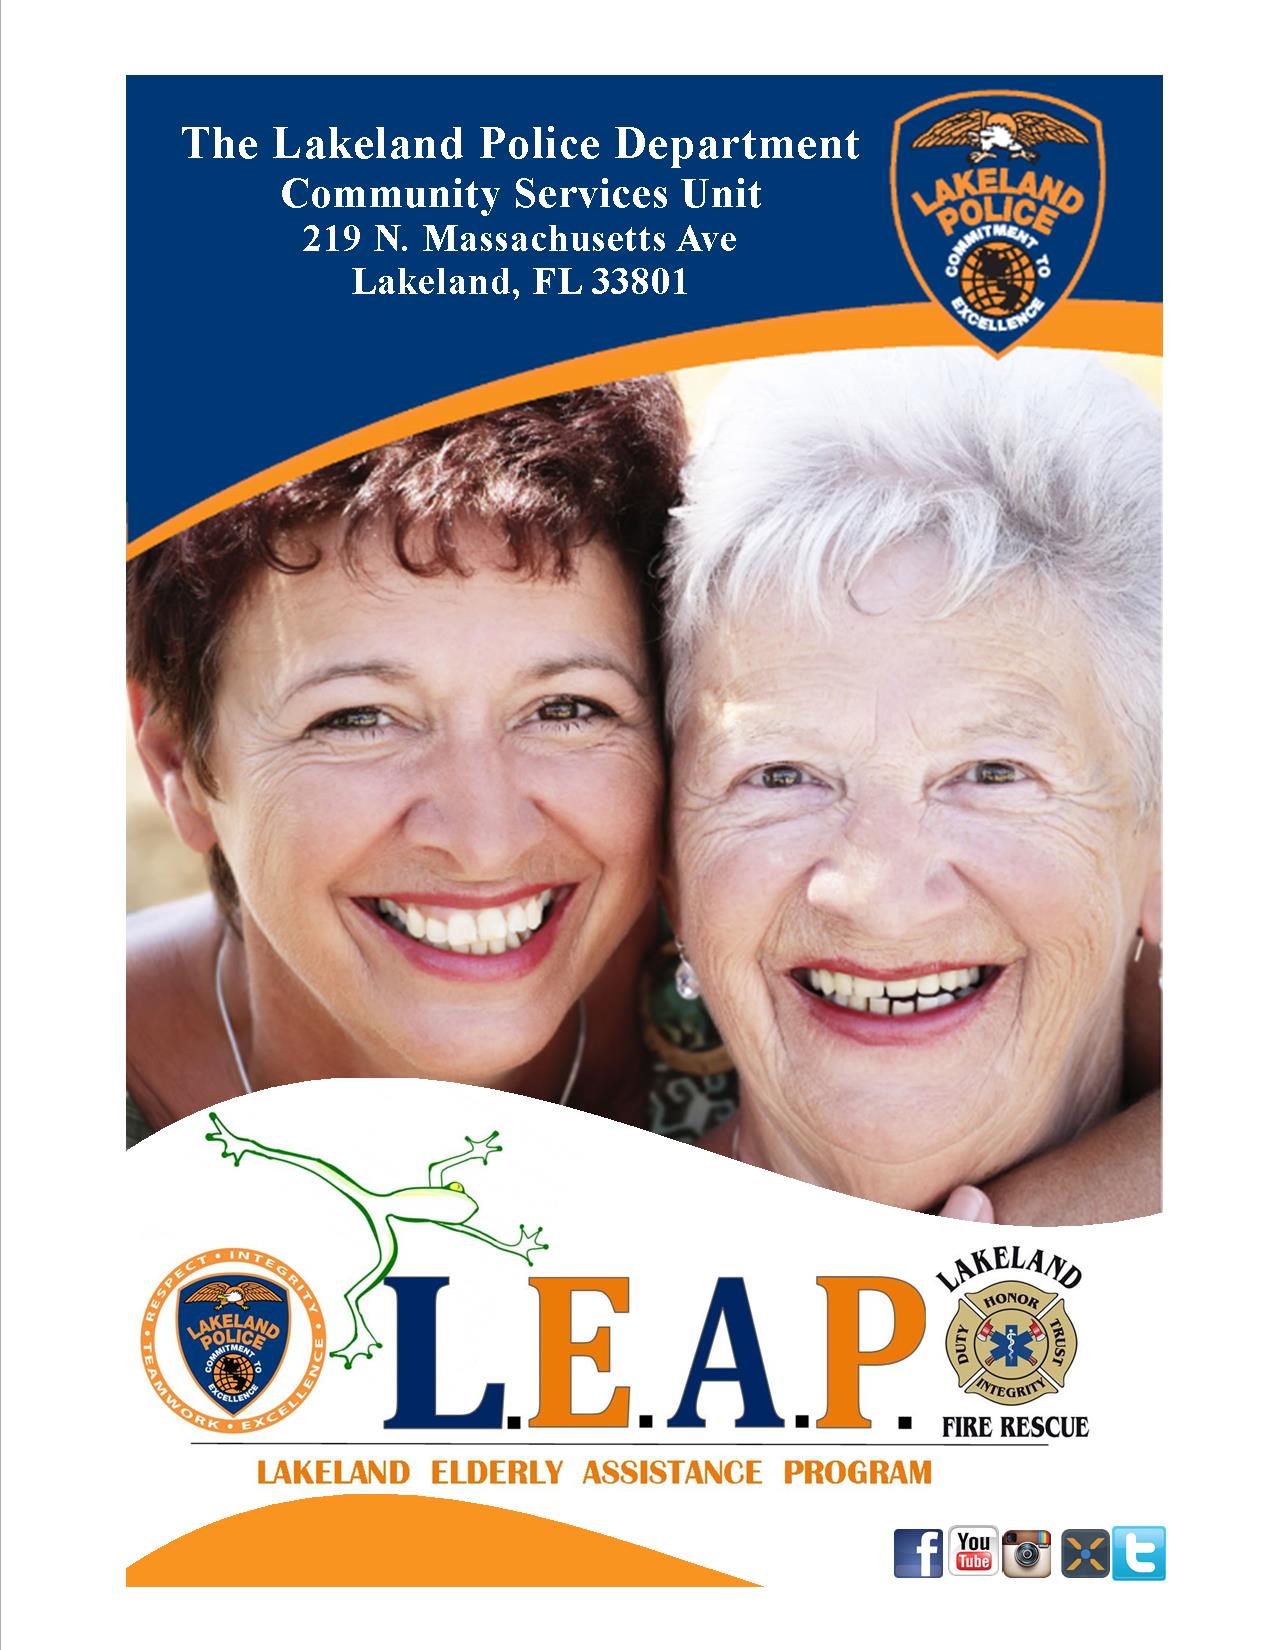 A photo of the Lakeland Elderly Assistance Program poster